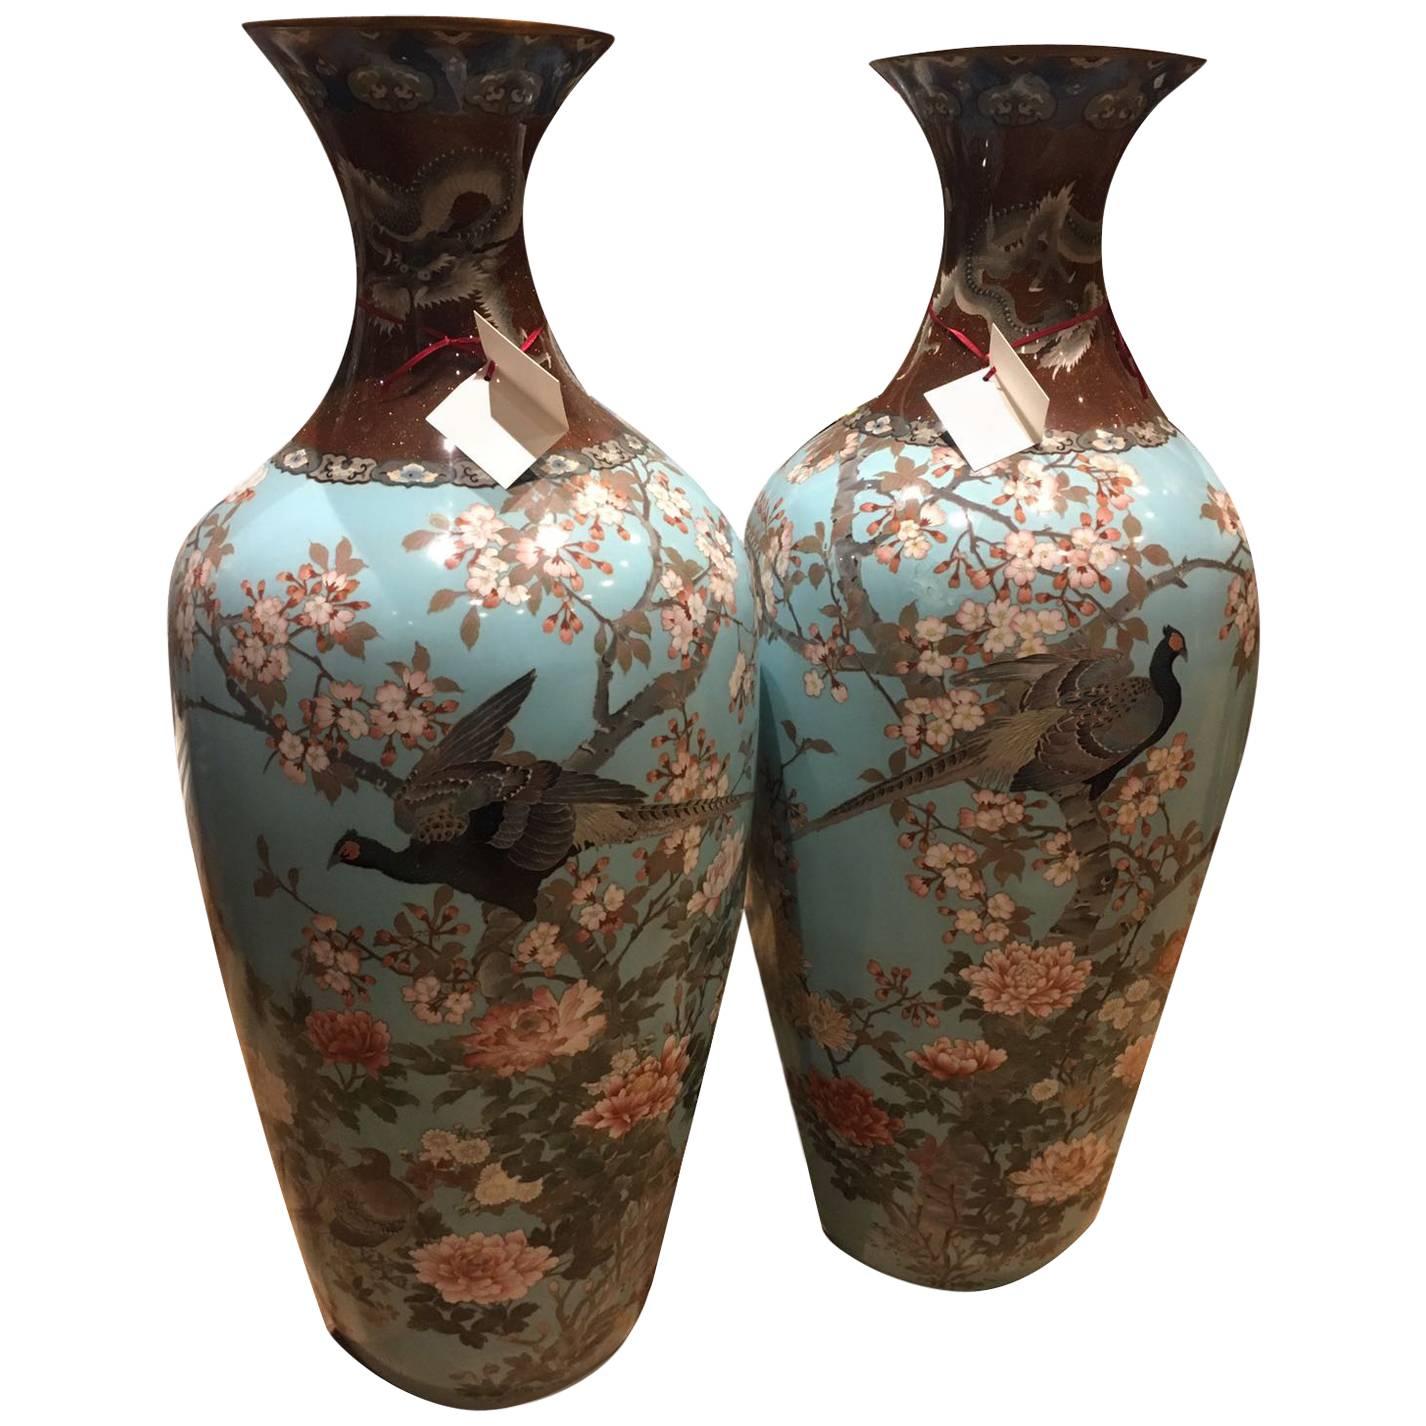 19th Century Japanese, Meiji Period Vases